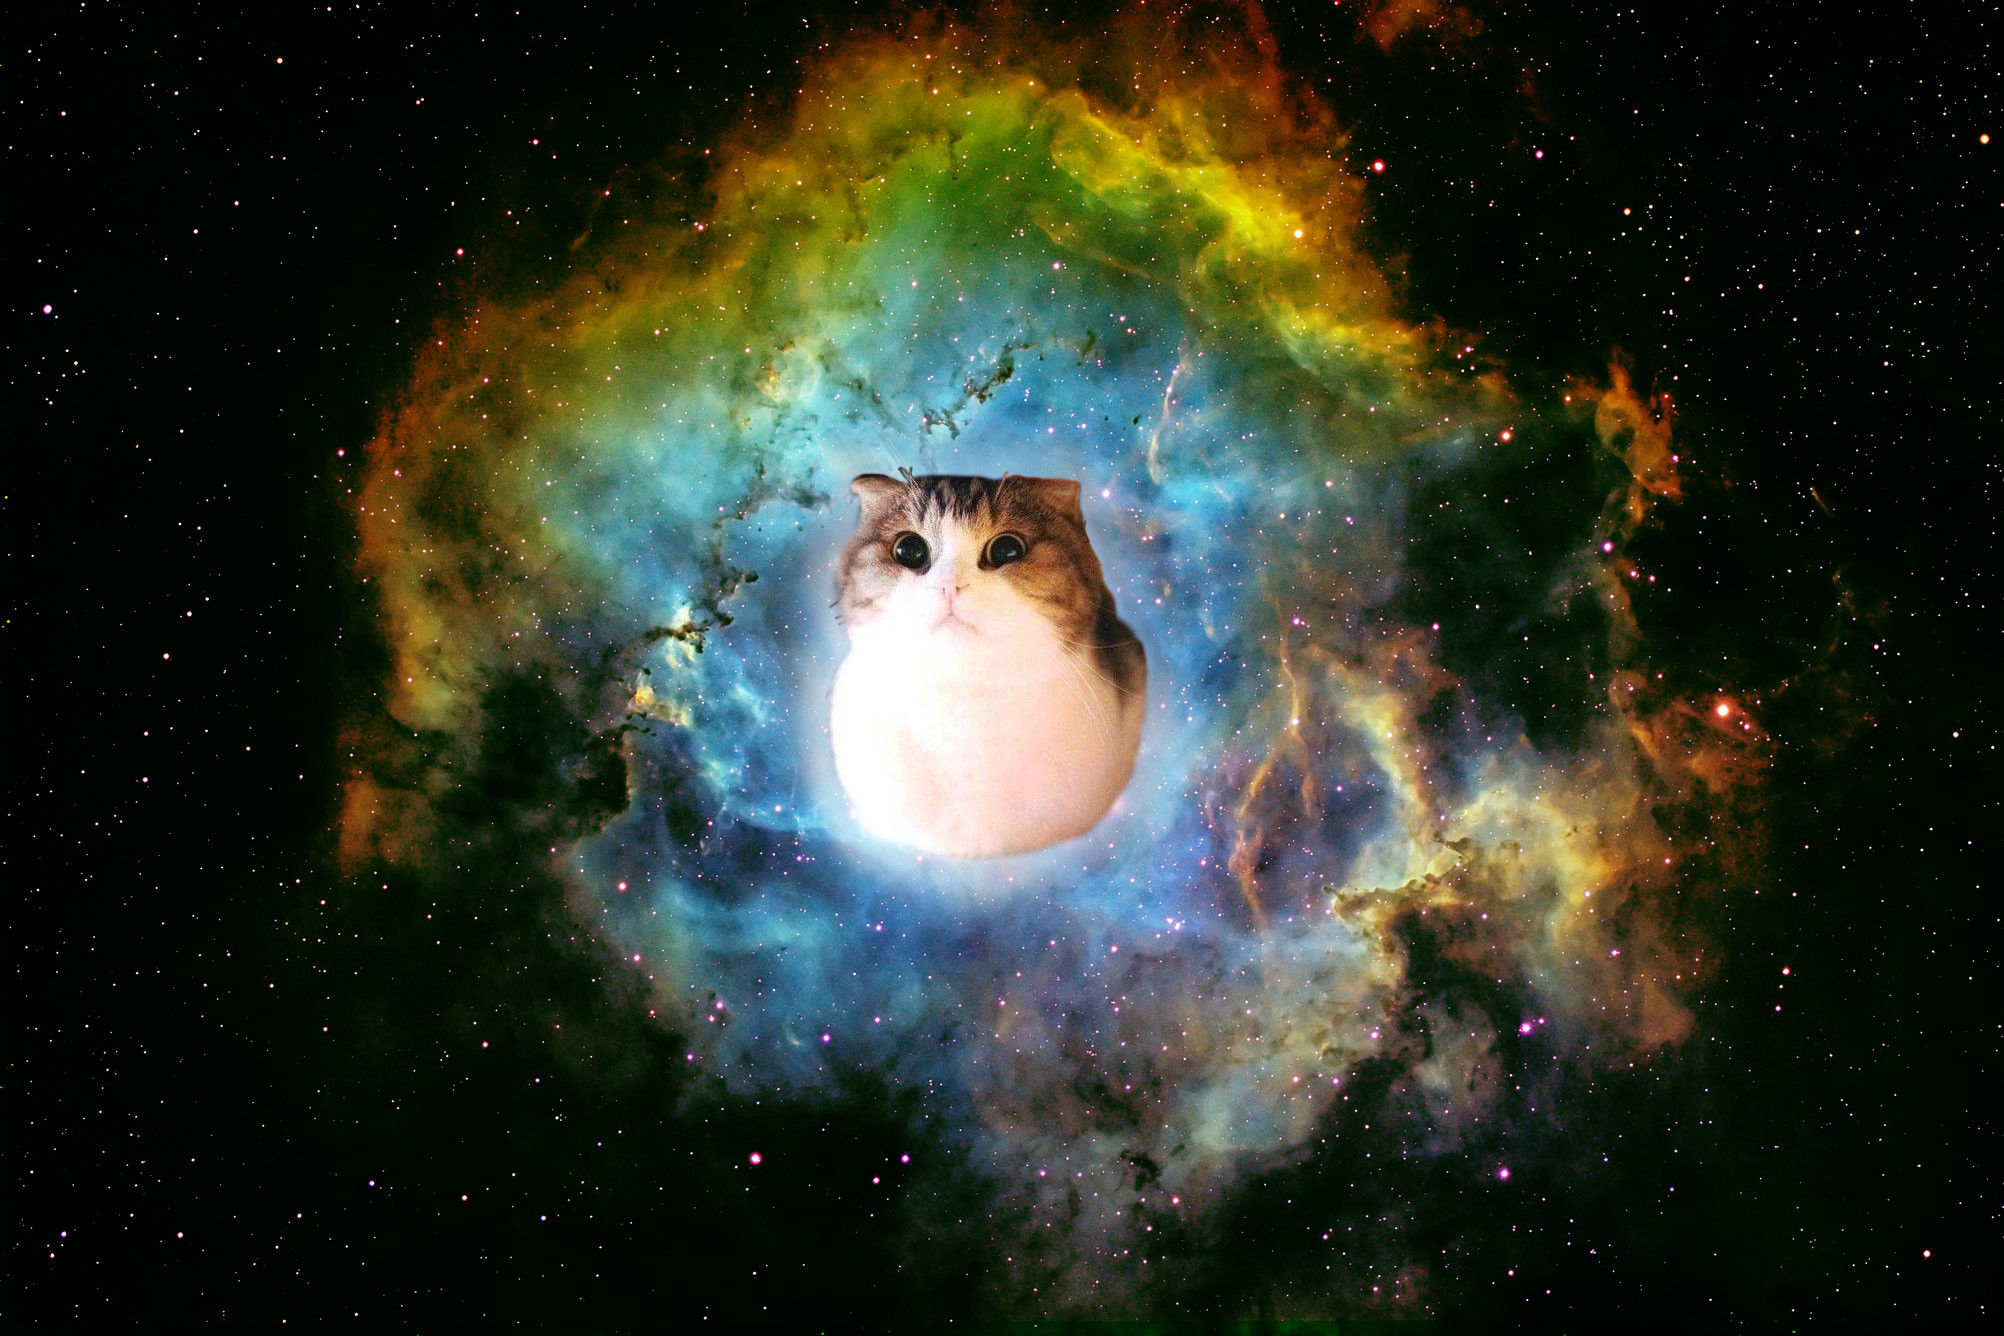 space cat iphone wallpaper